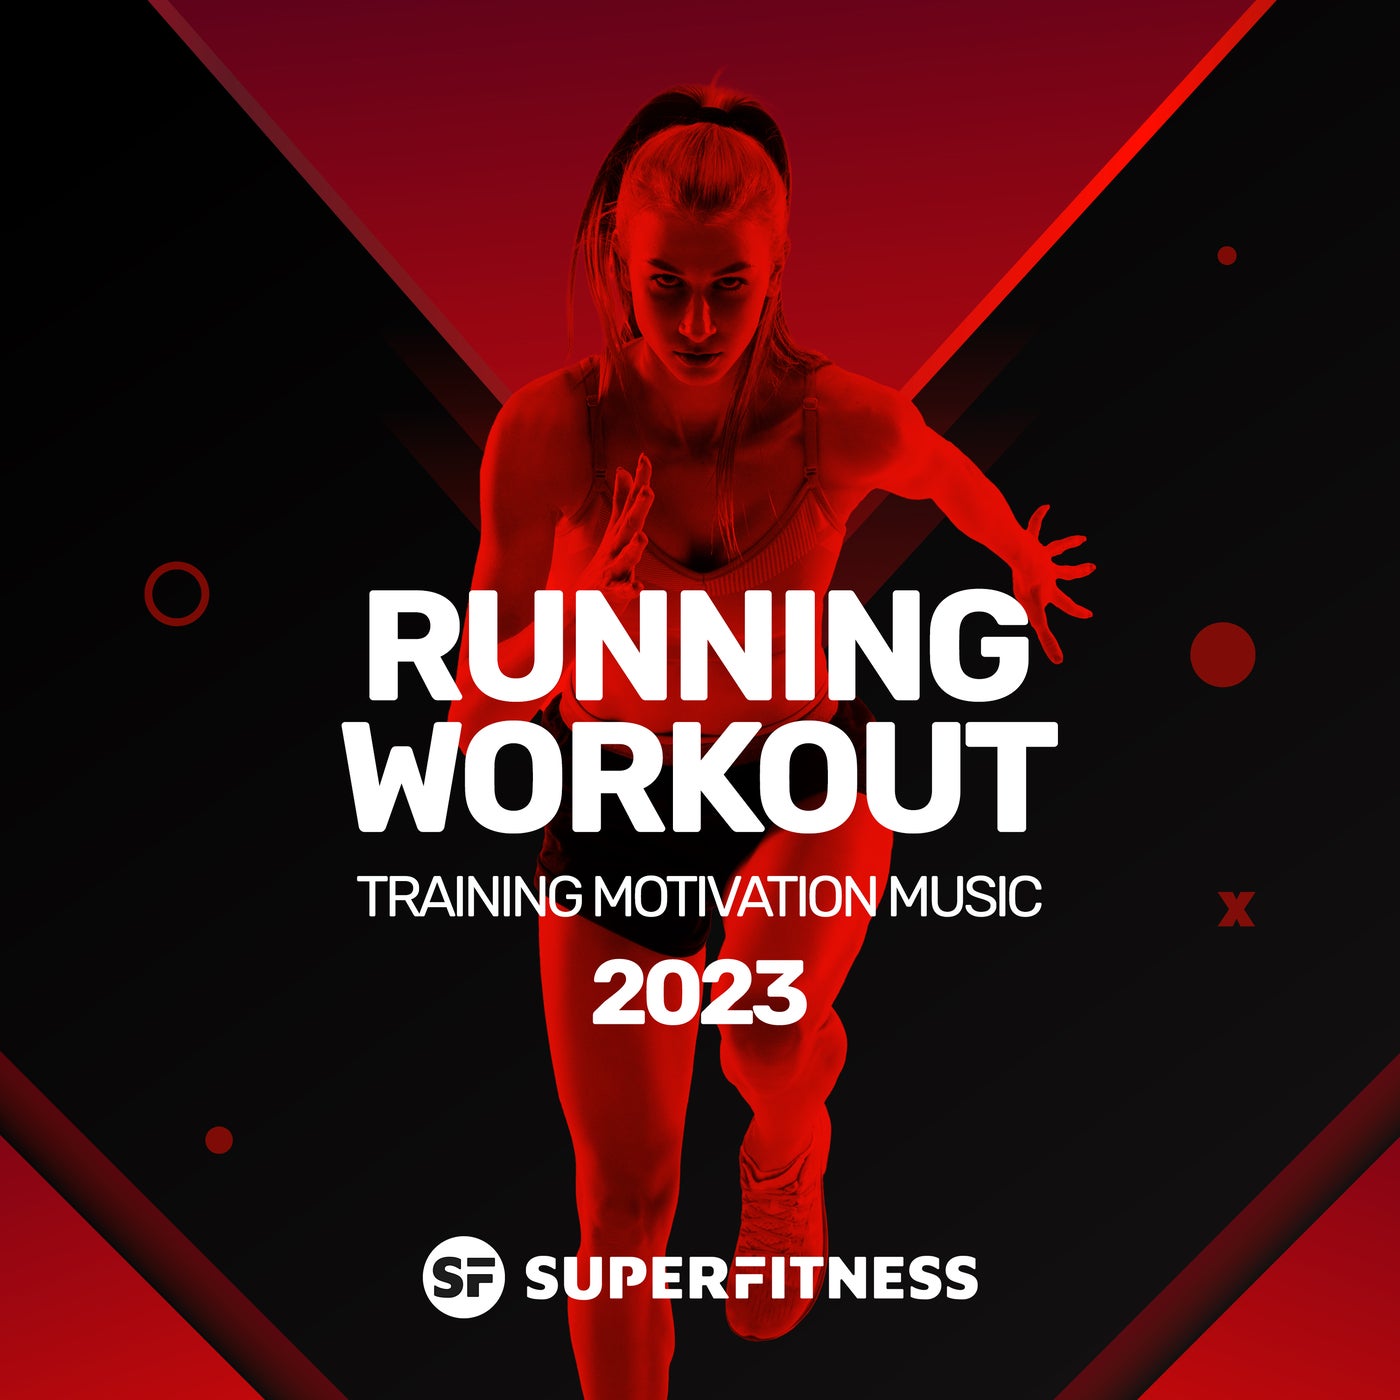 Running Workout: Training Motivation Music 2023